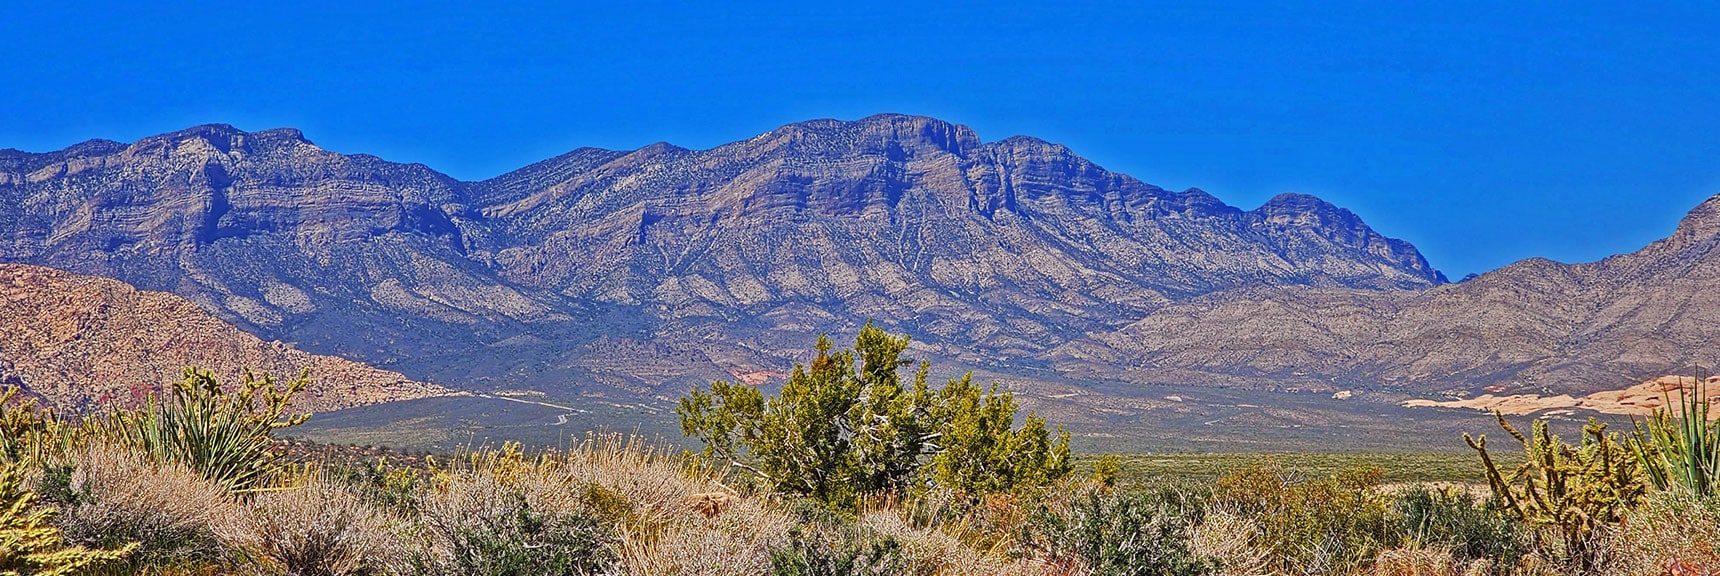 La Madre Cliffs on North End of Red Rock Canyon | Juniper Canyon | Red Rock Canyon National Conservation Area, Nevada | David Smith | LasVegasAreaTrails.com